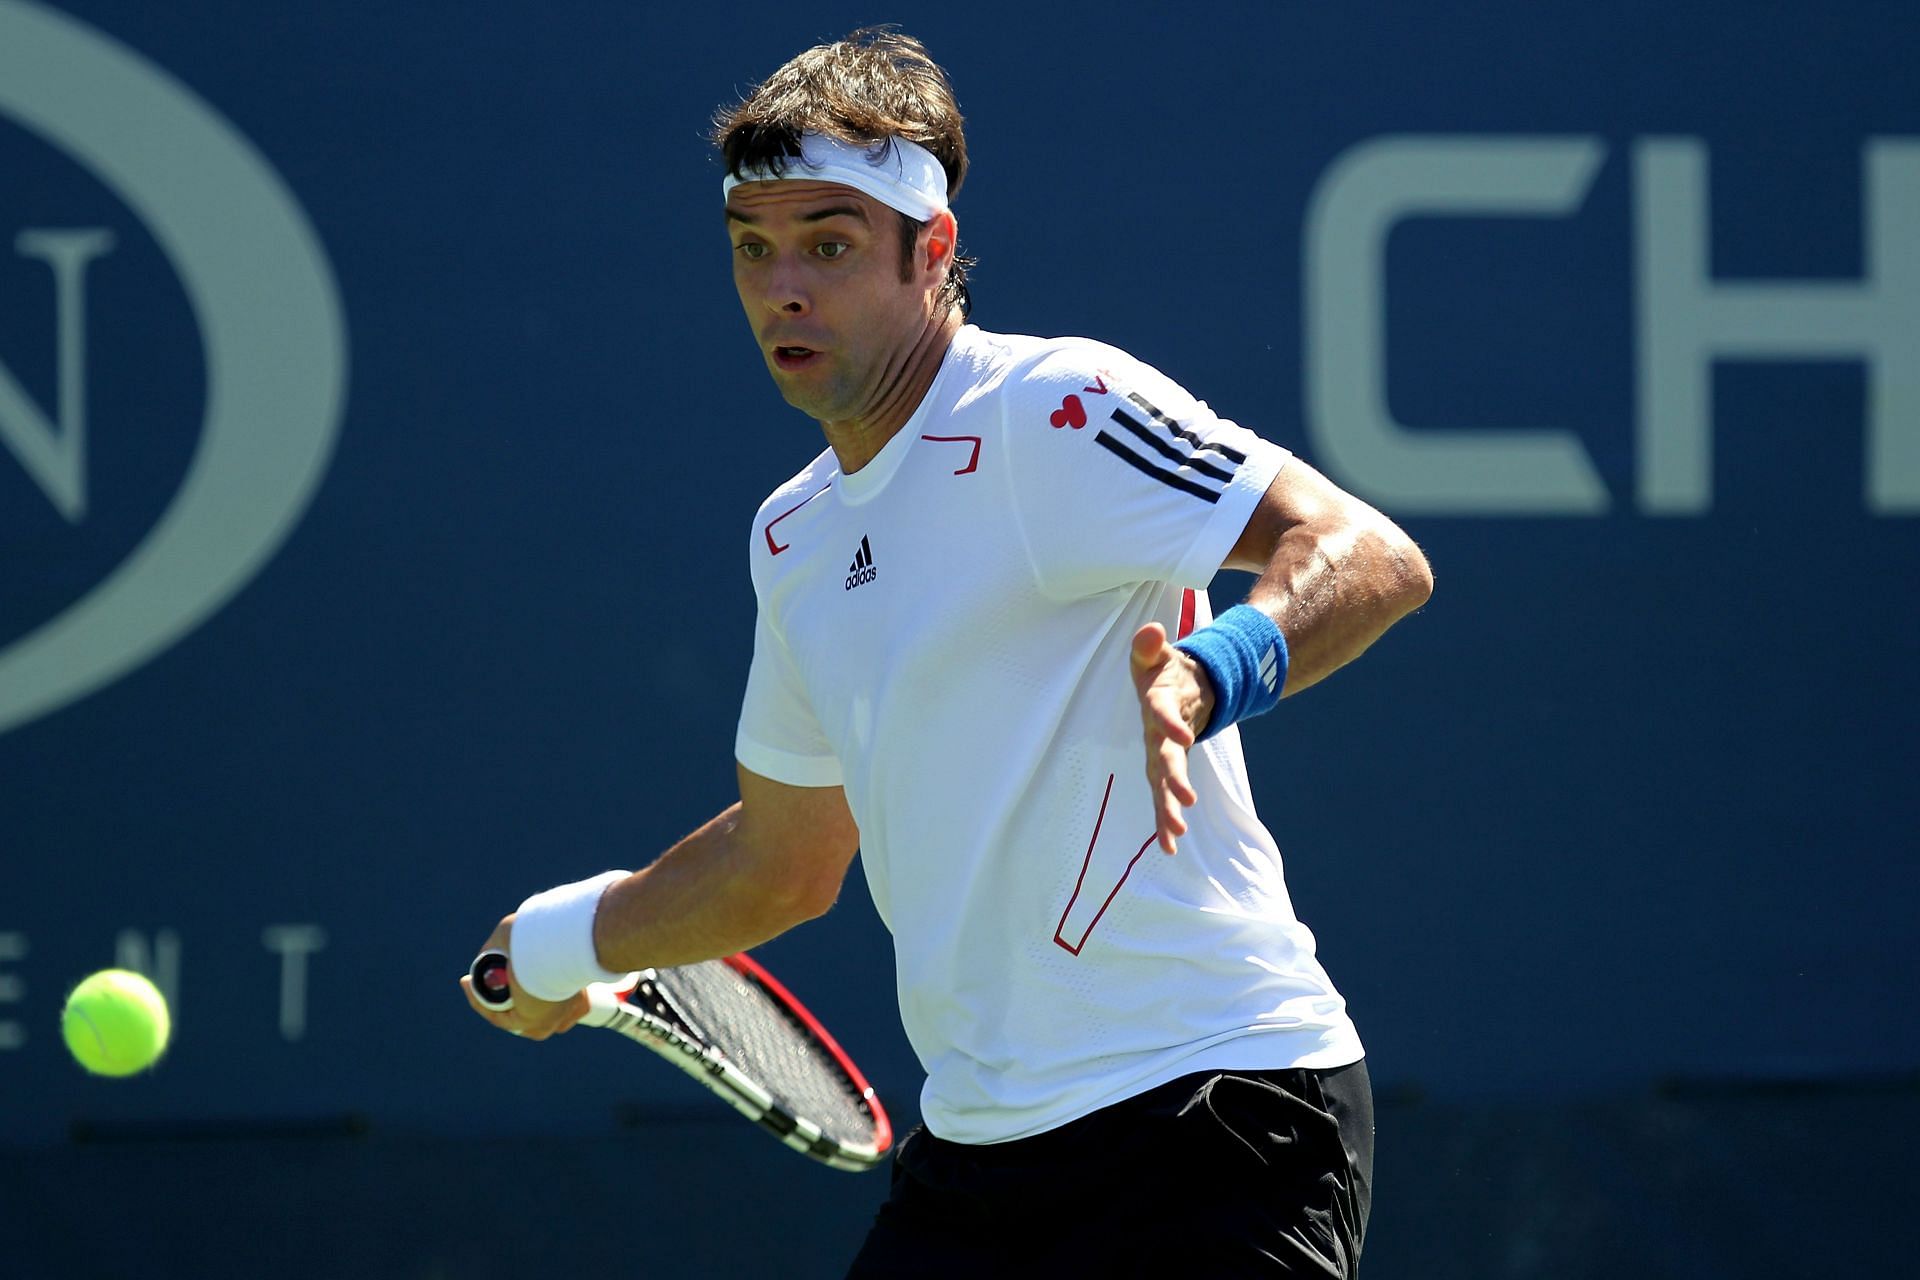 Fernando Gonzalez at the 2010 US Open.